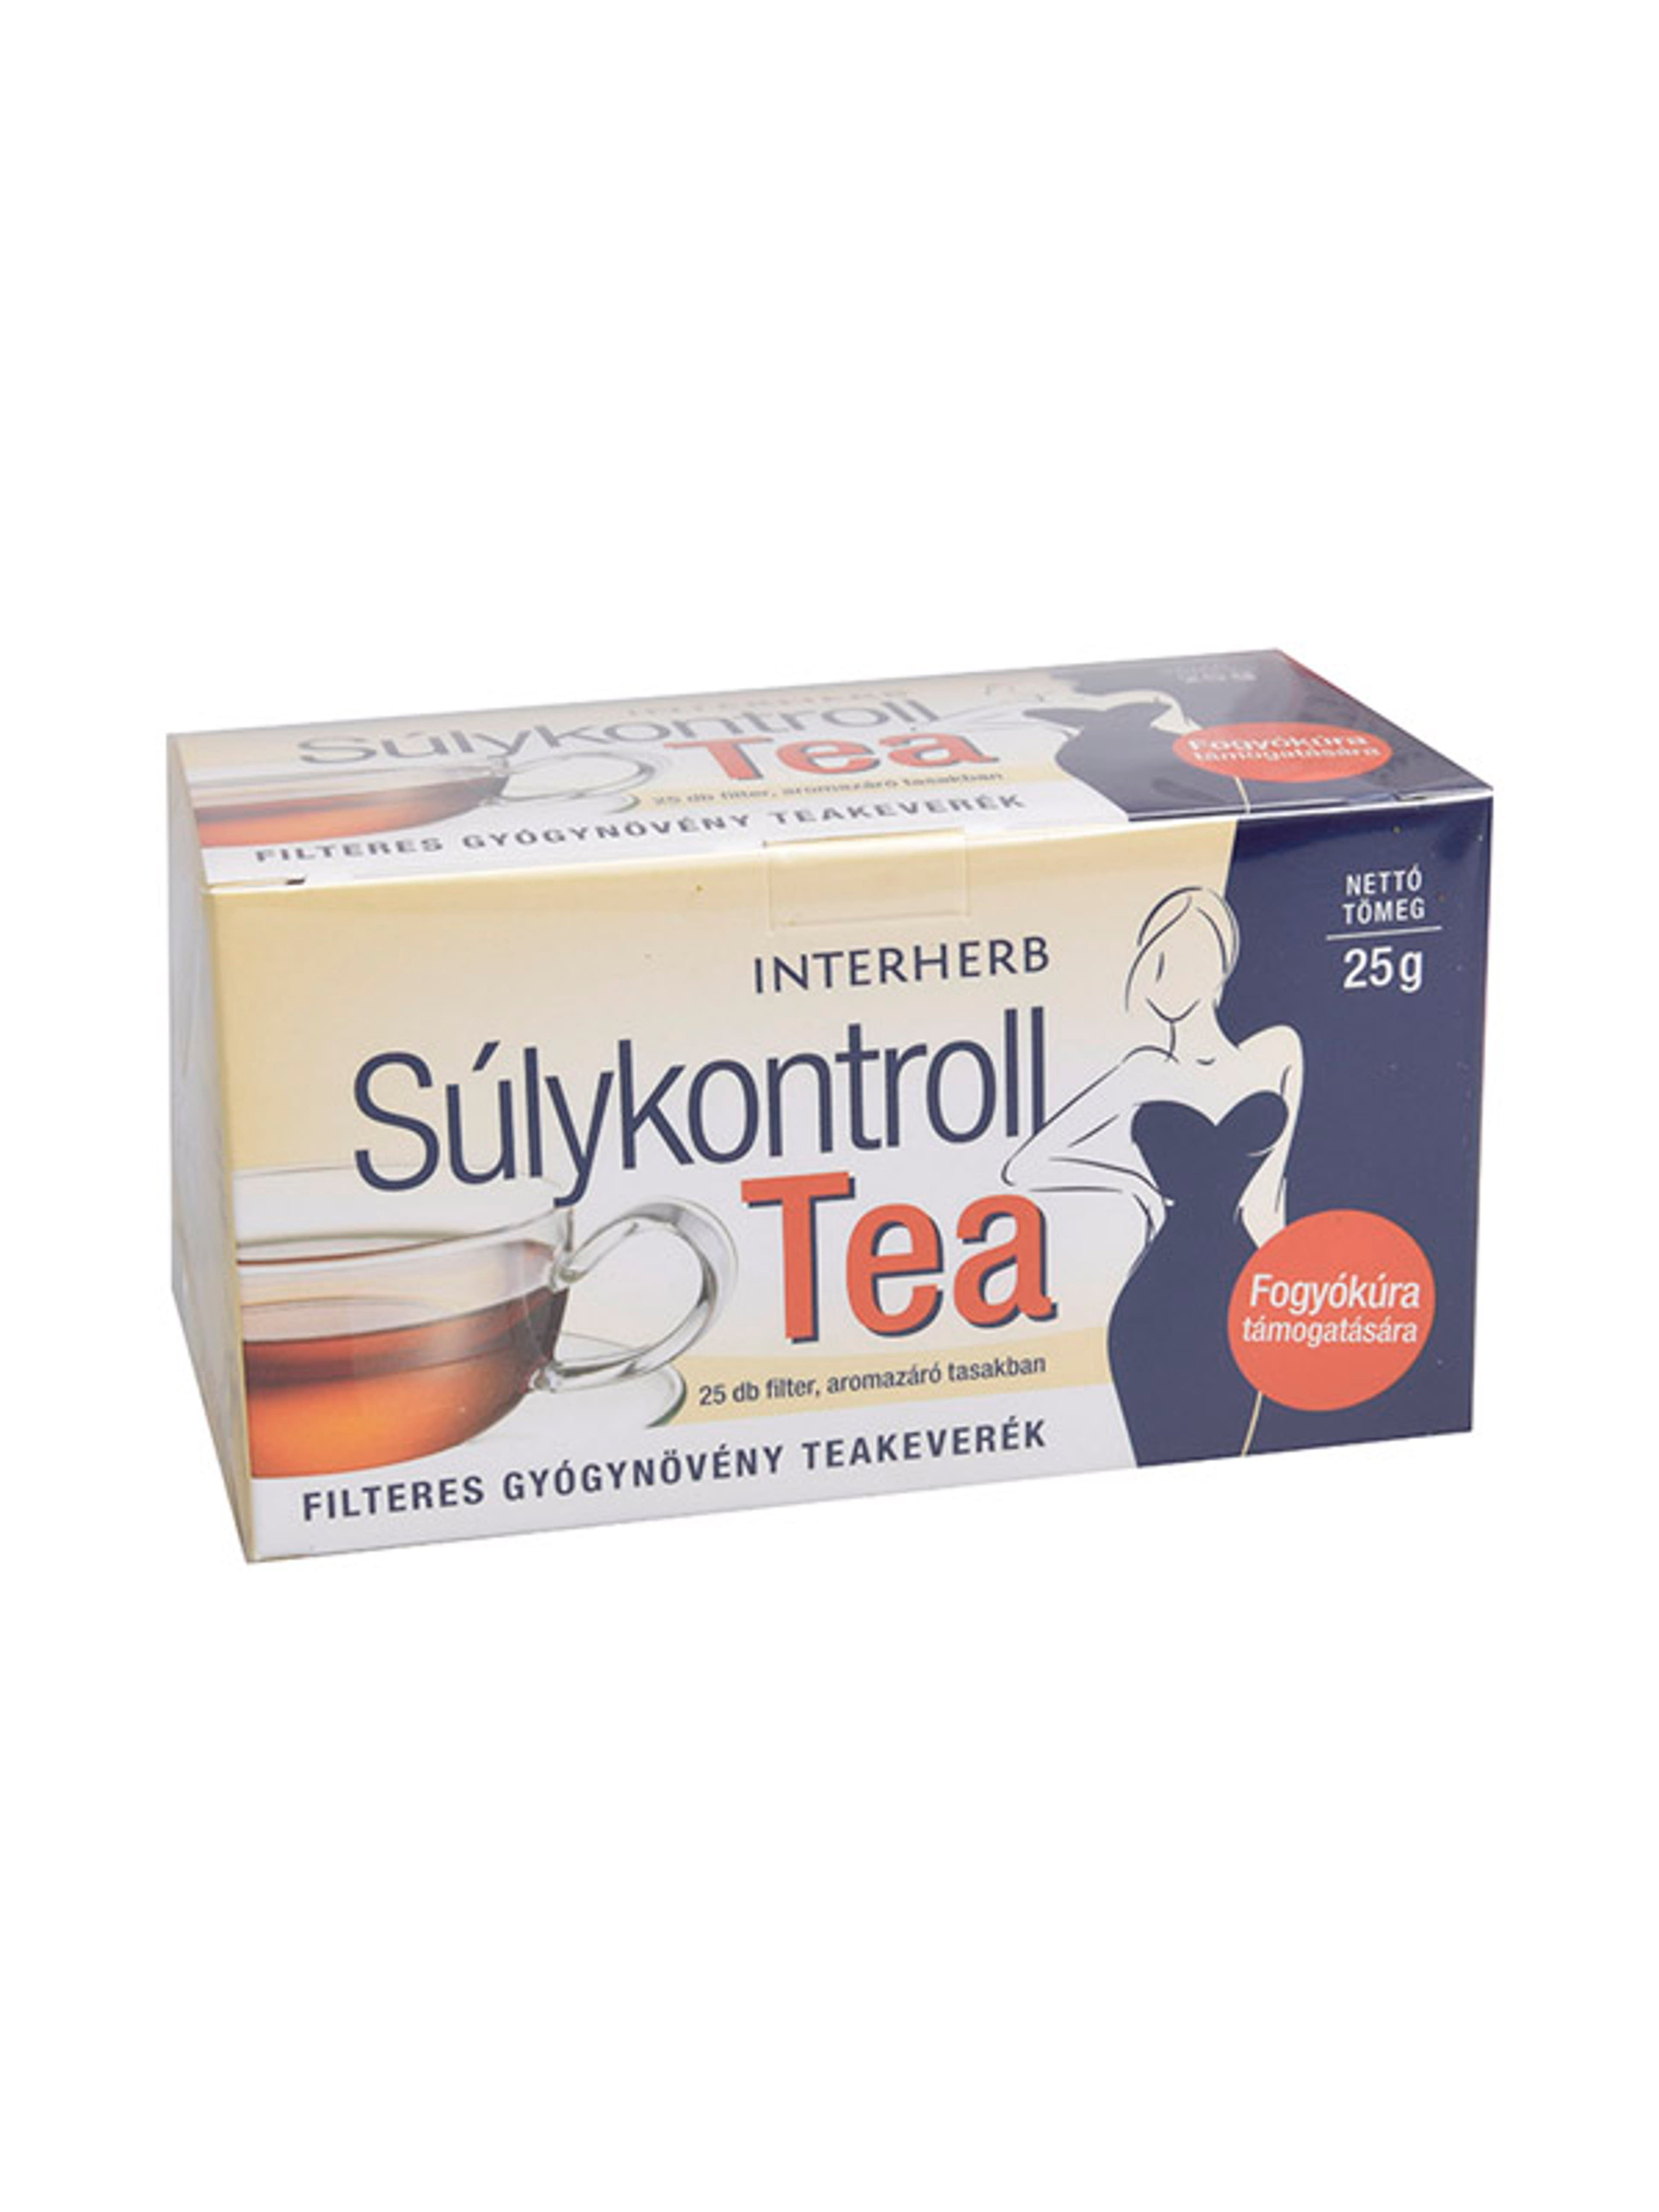 Interherb súlykontroll tea filter - 25 db